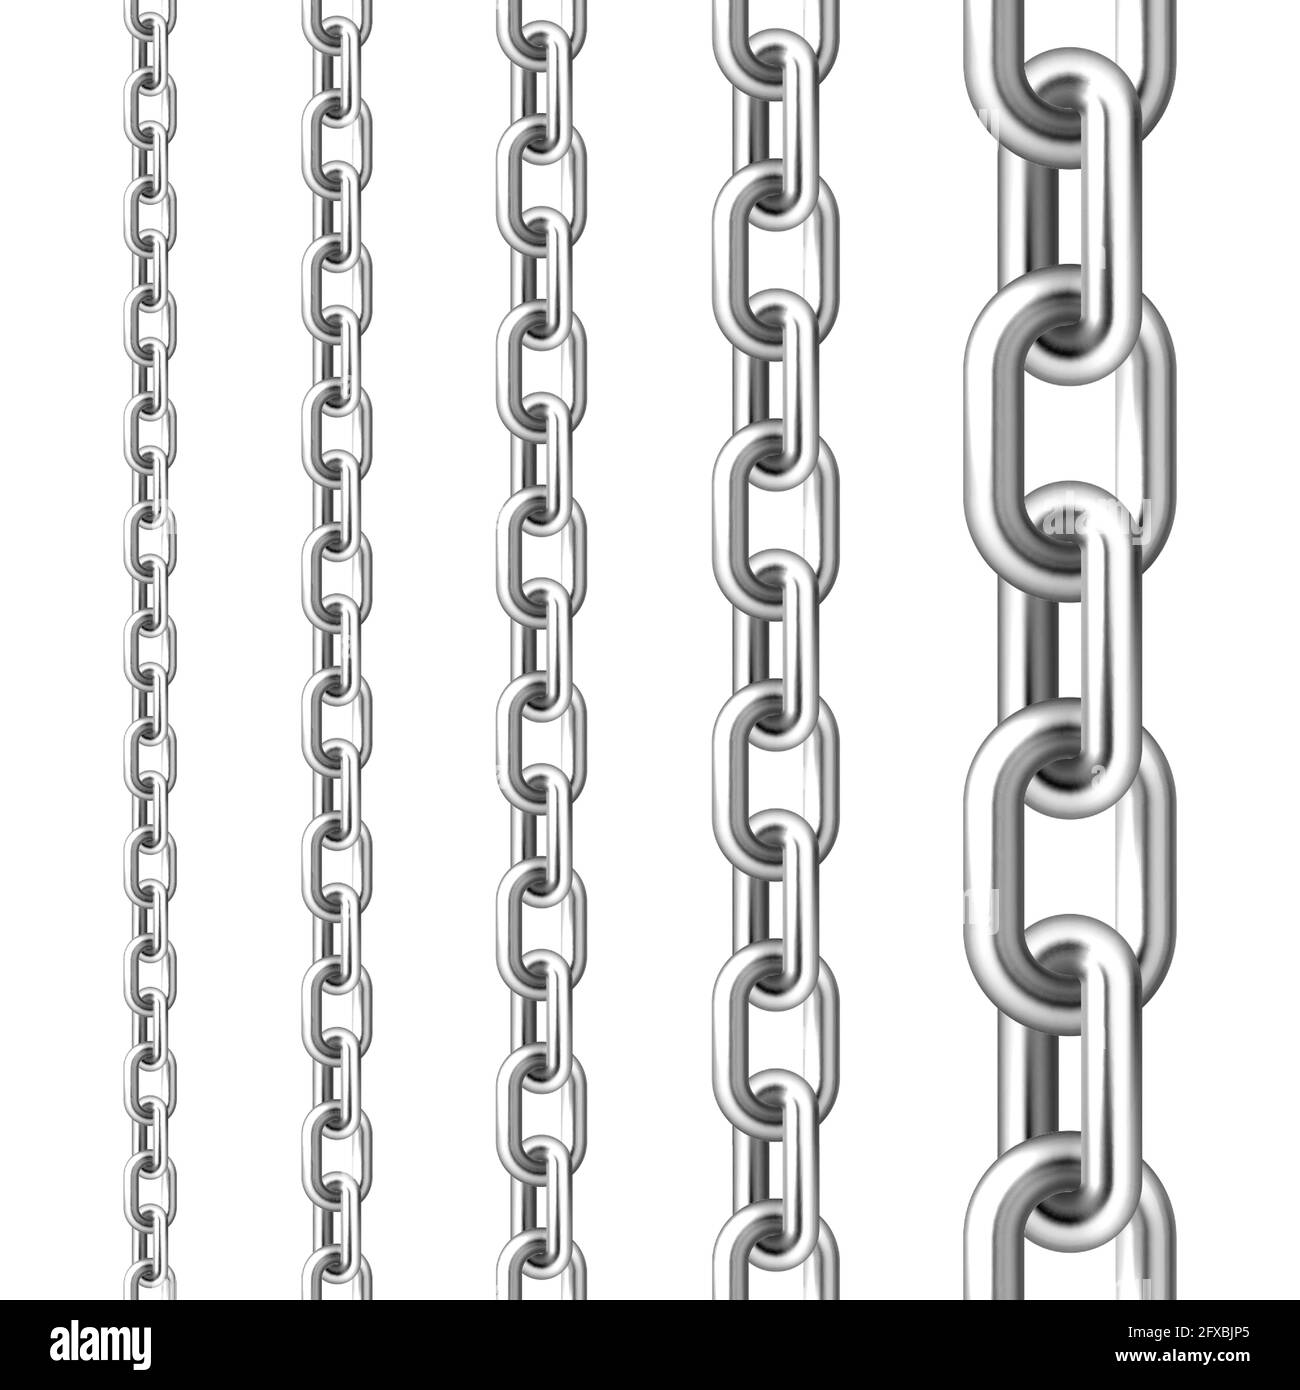 Metal chain seamless pattern metallic industrial Vector Image